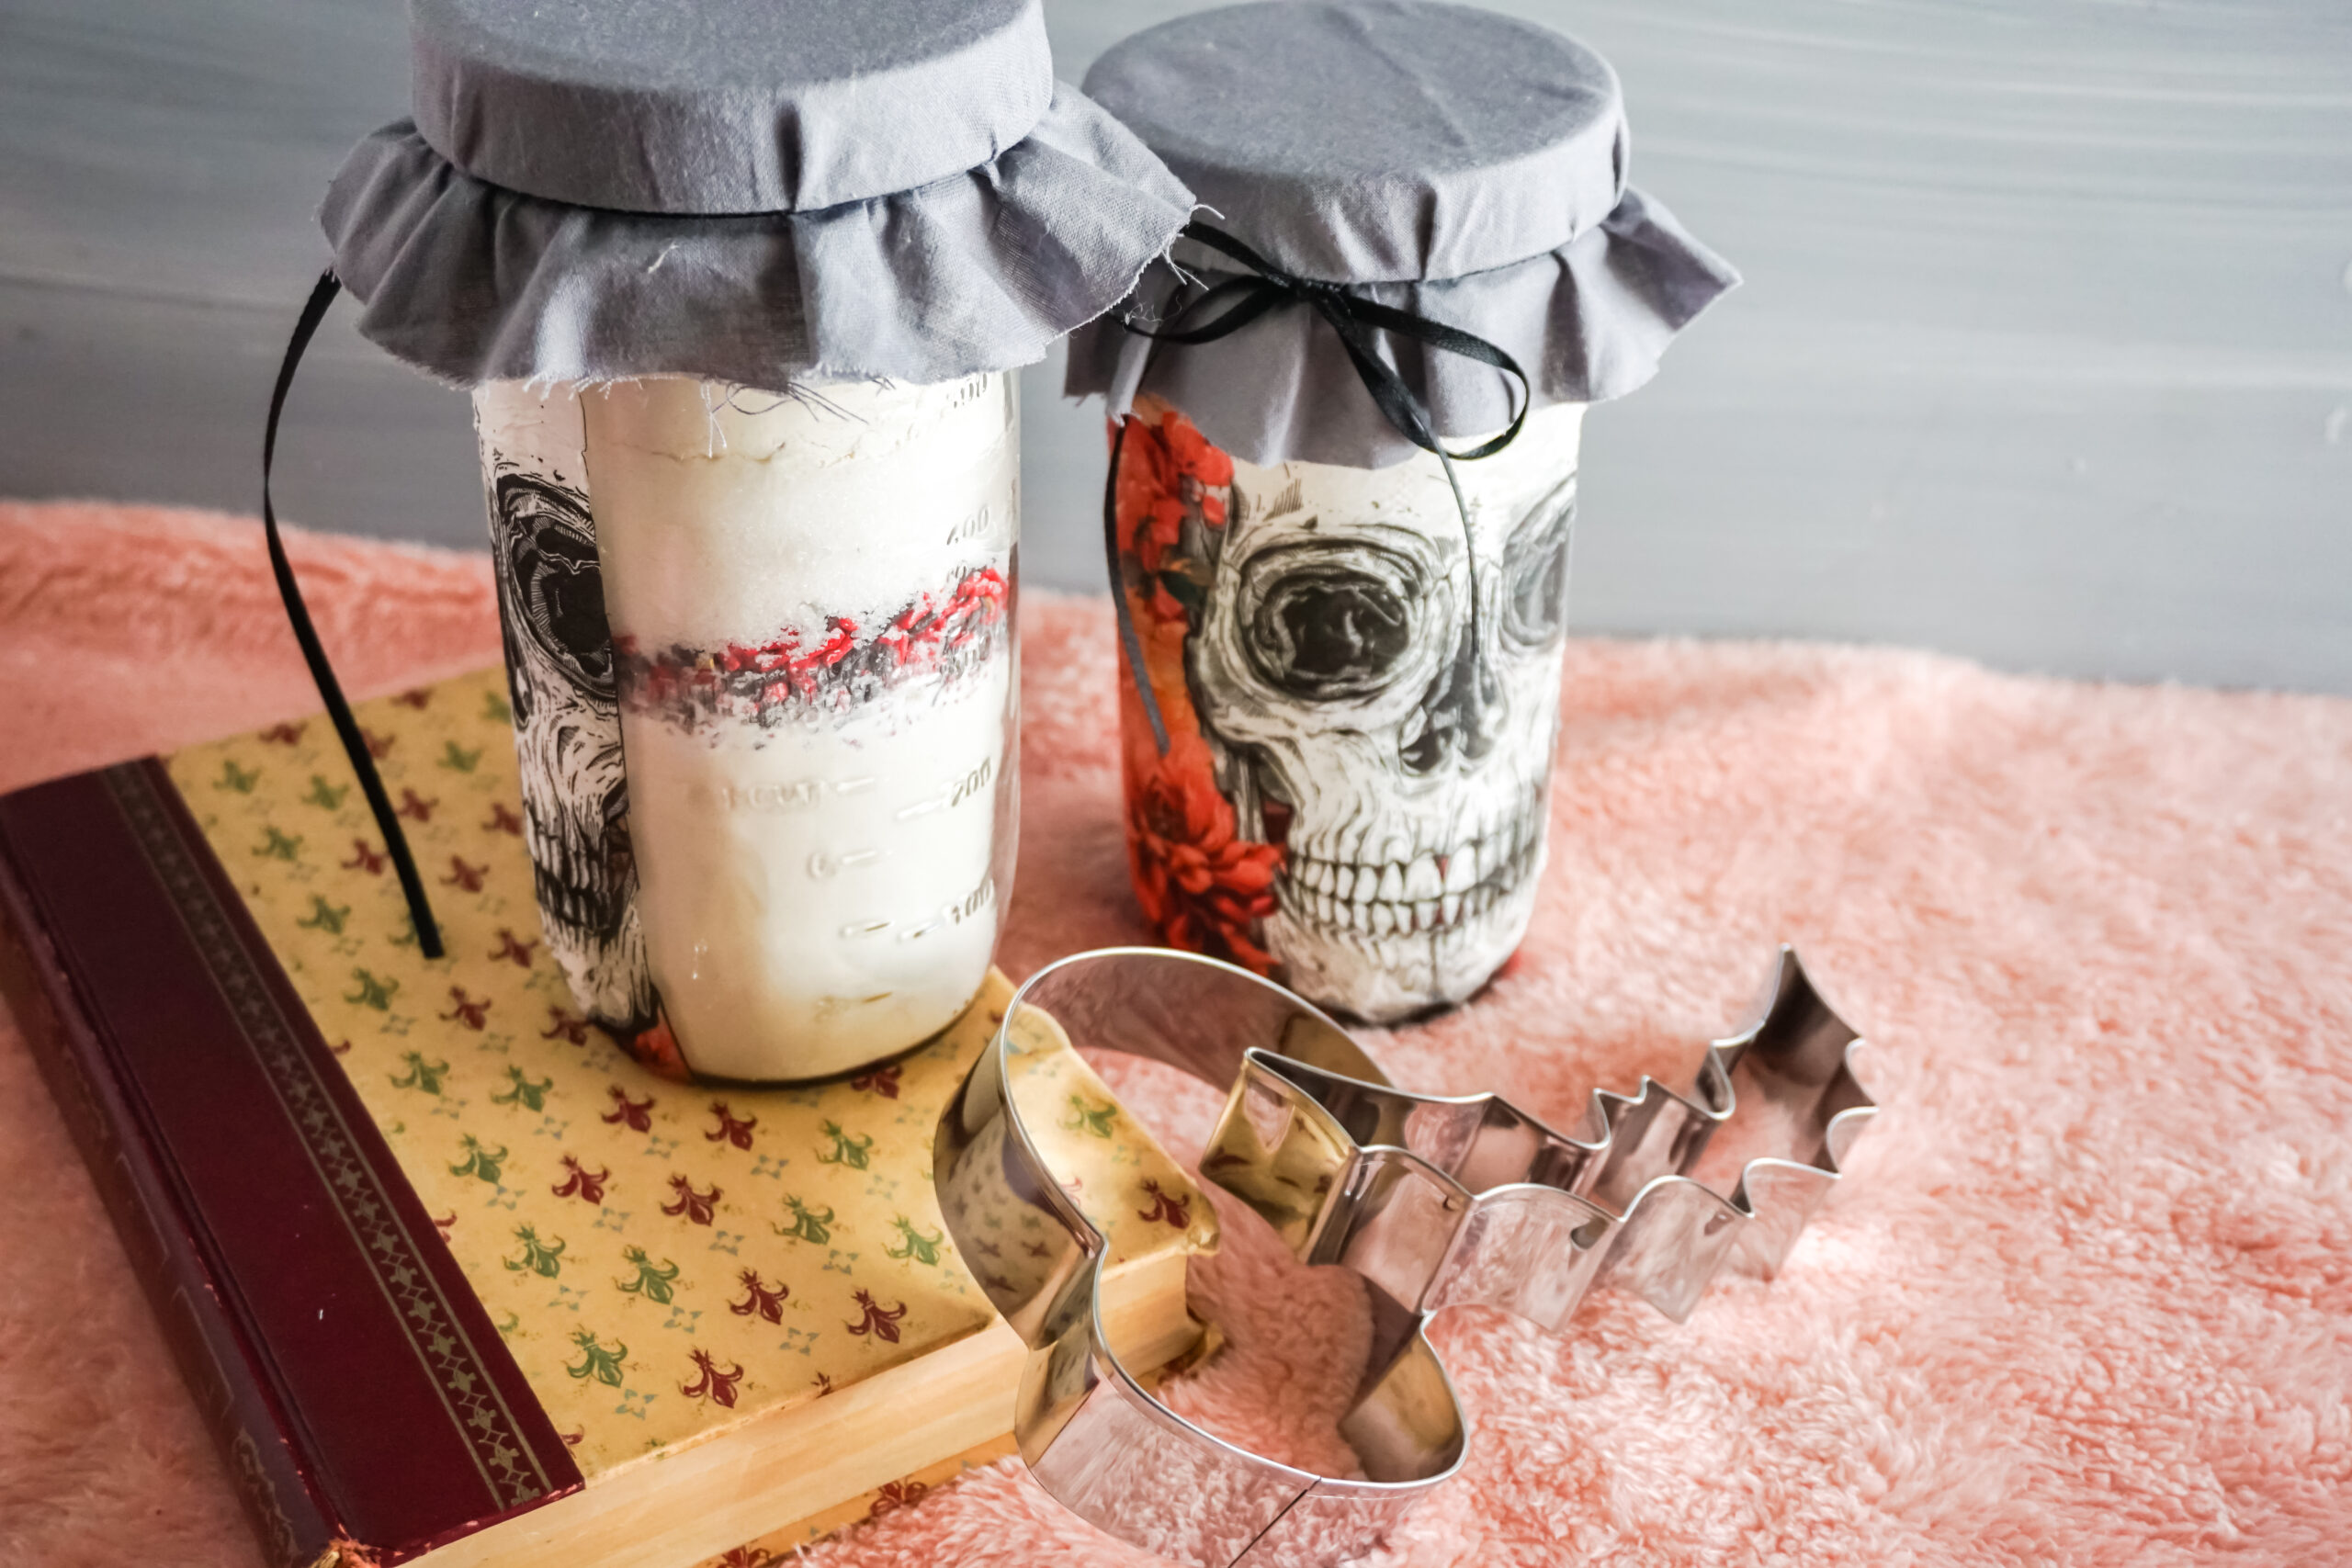 Skull Cookie Jar For Halloween